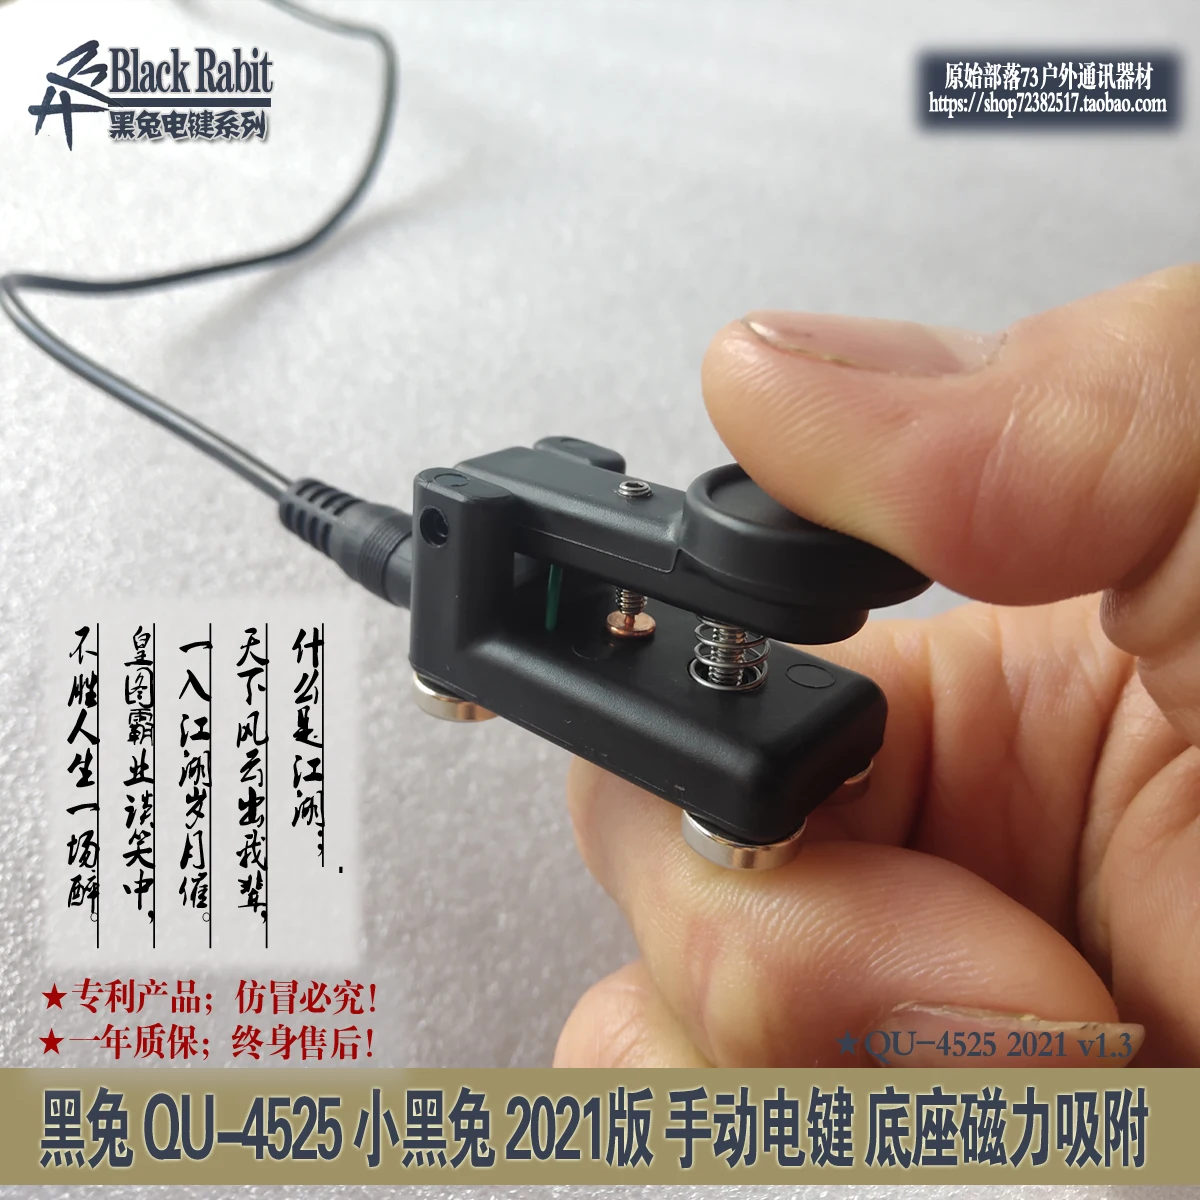 

Qu-4525 little black rabbit 2021 ultra portable CW manual key base magnetic adsorption Morse code